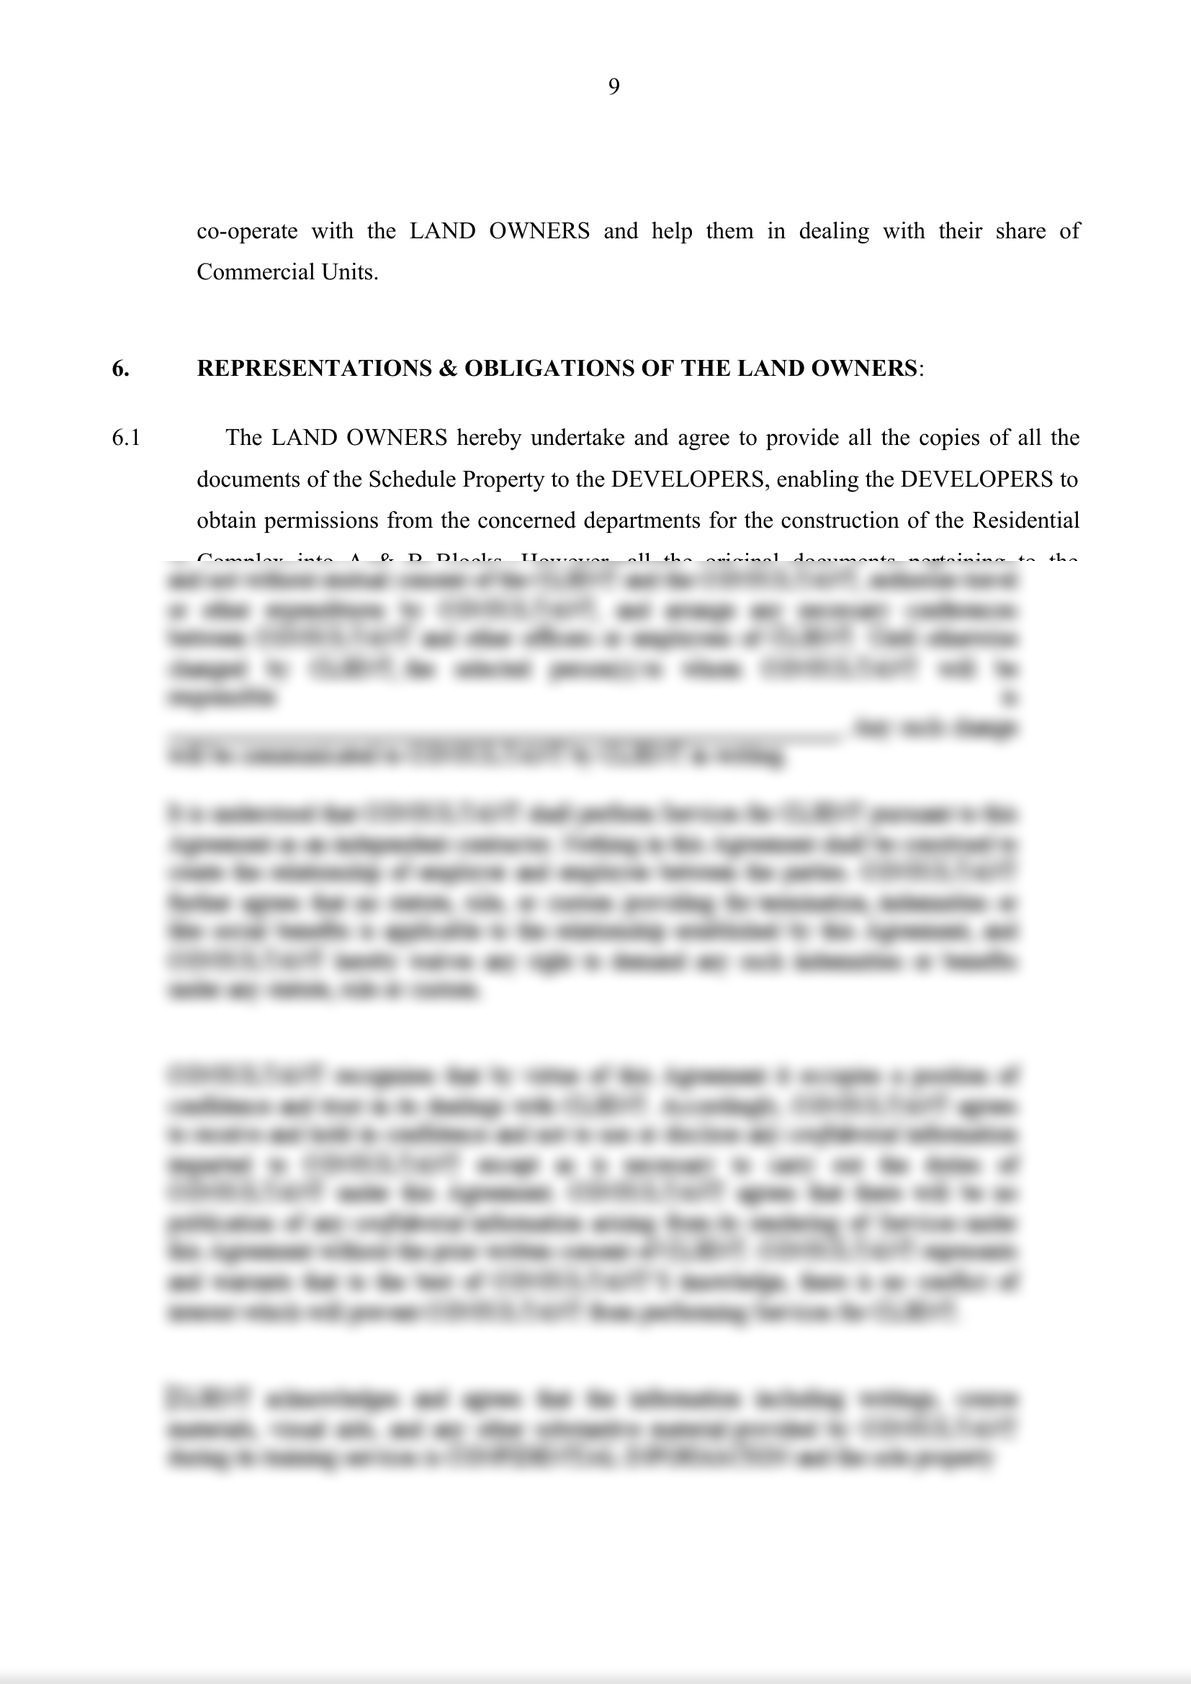 Development Agreement between Landlords and Developer including GPA-8